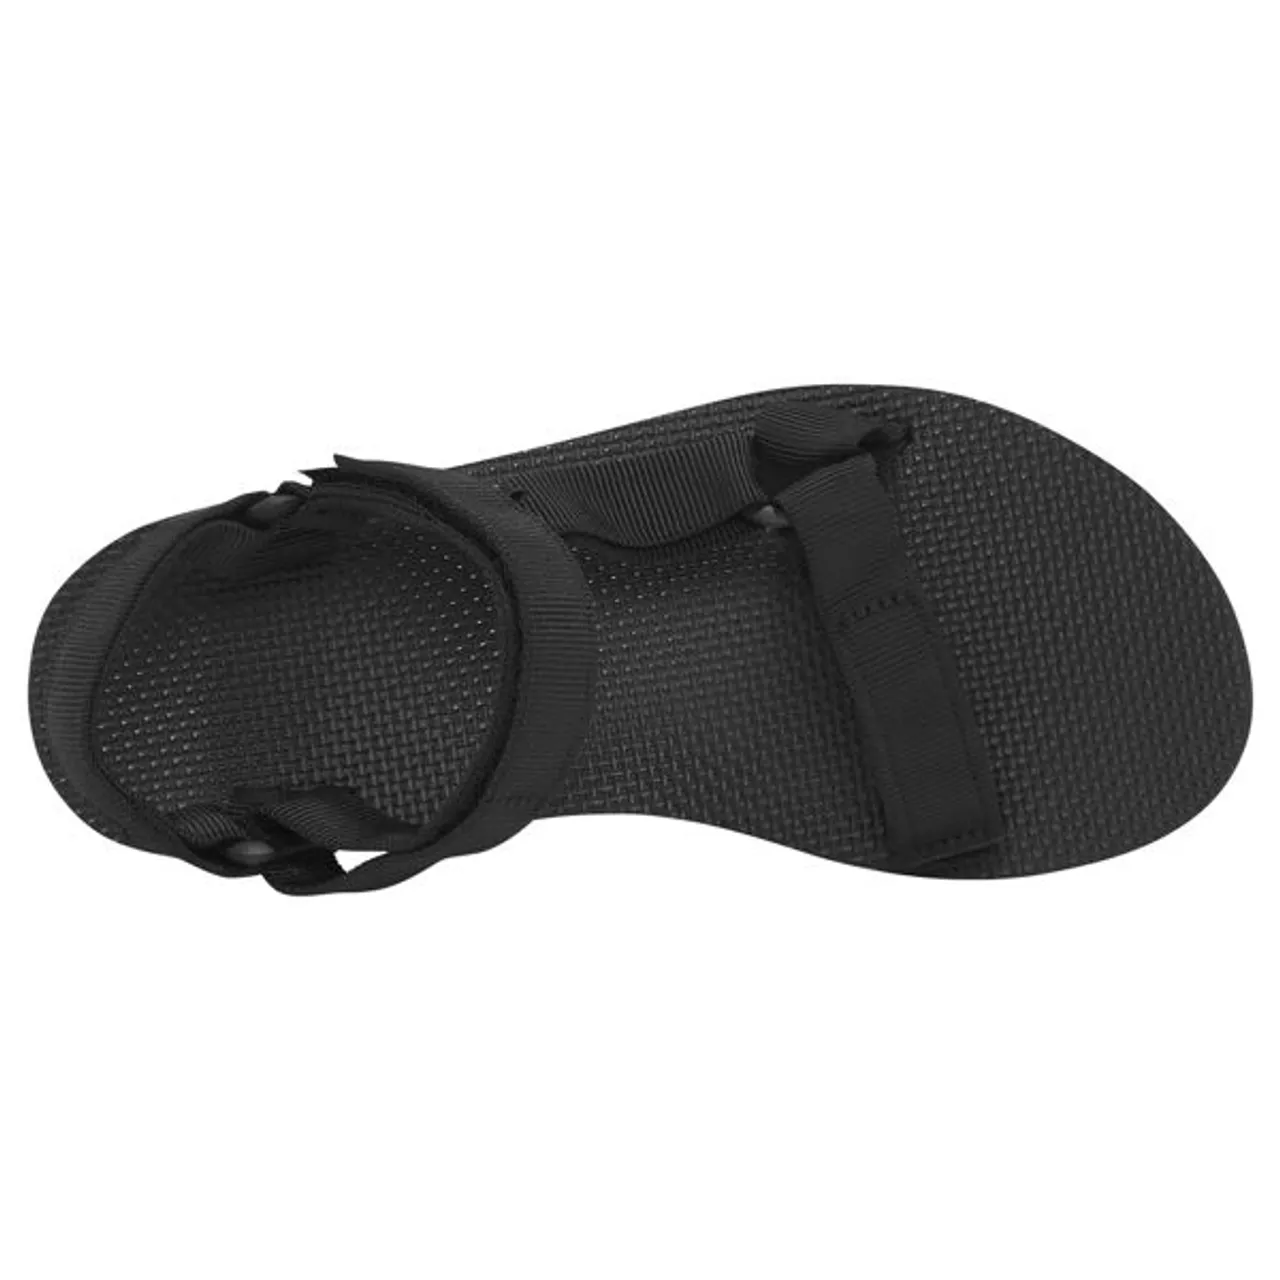 Sandale TEVA "Original Universal Sandal W's" Gr. 41, schwarz Schuhe Damen-Outdoorbekleidung